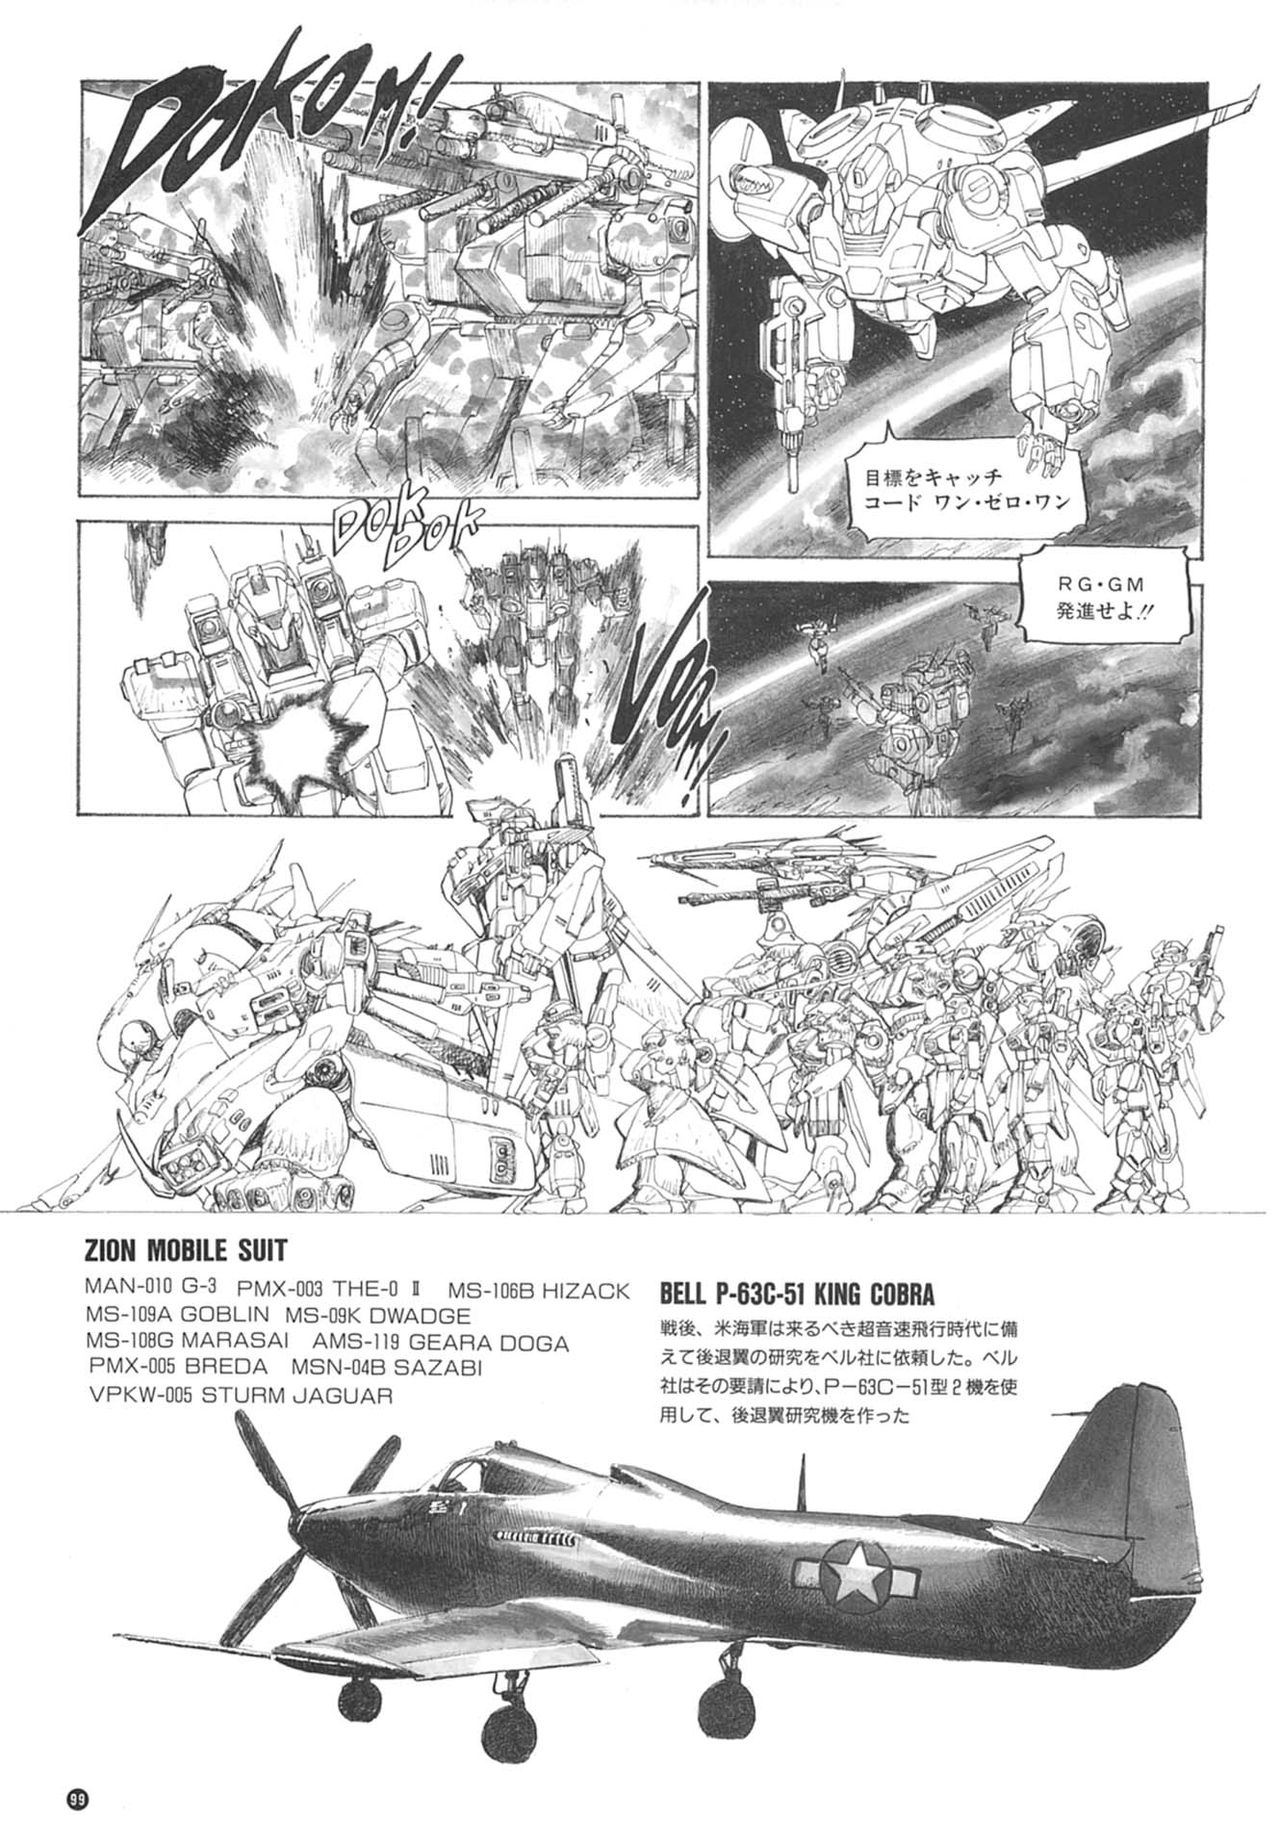 [Kazuhisa Kondo] Kazuhisa Kondo 2D & 3D Works - Go Ahead - From Mobile Suit Gundam to Original Mechanism 98